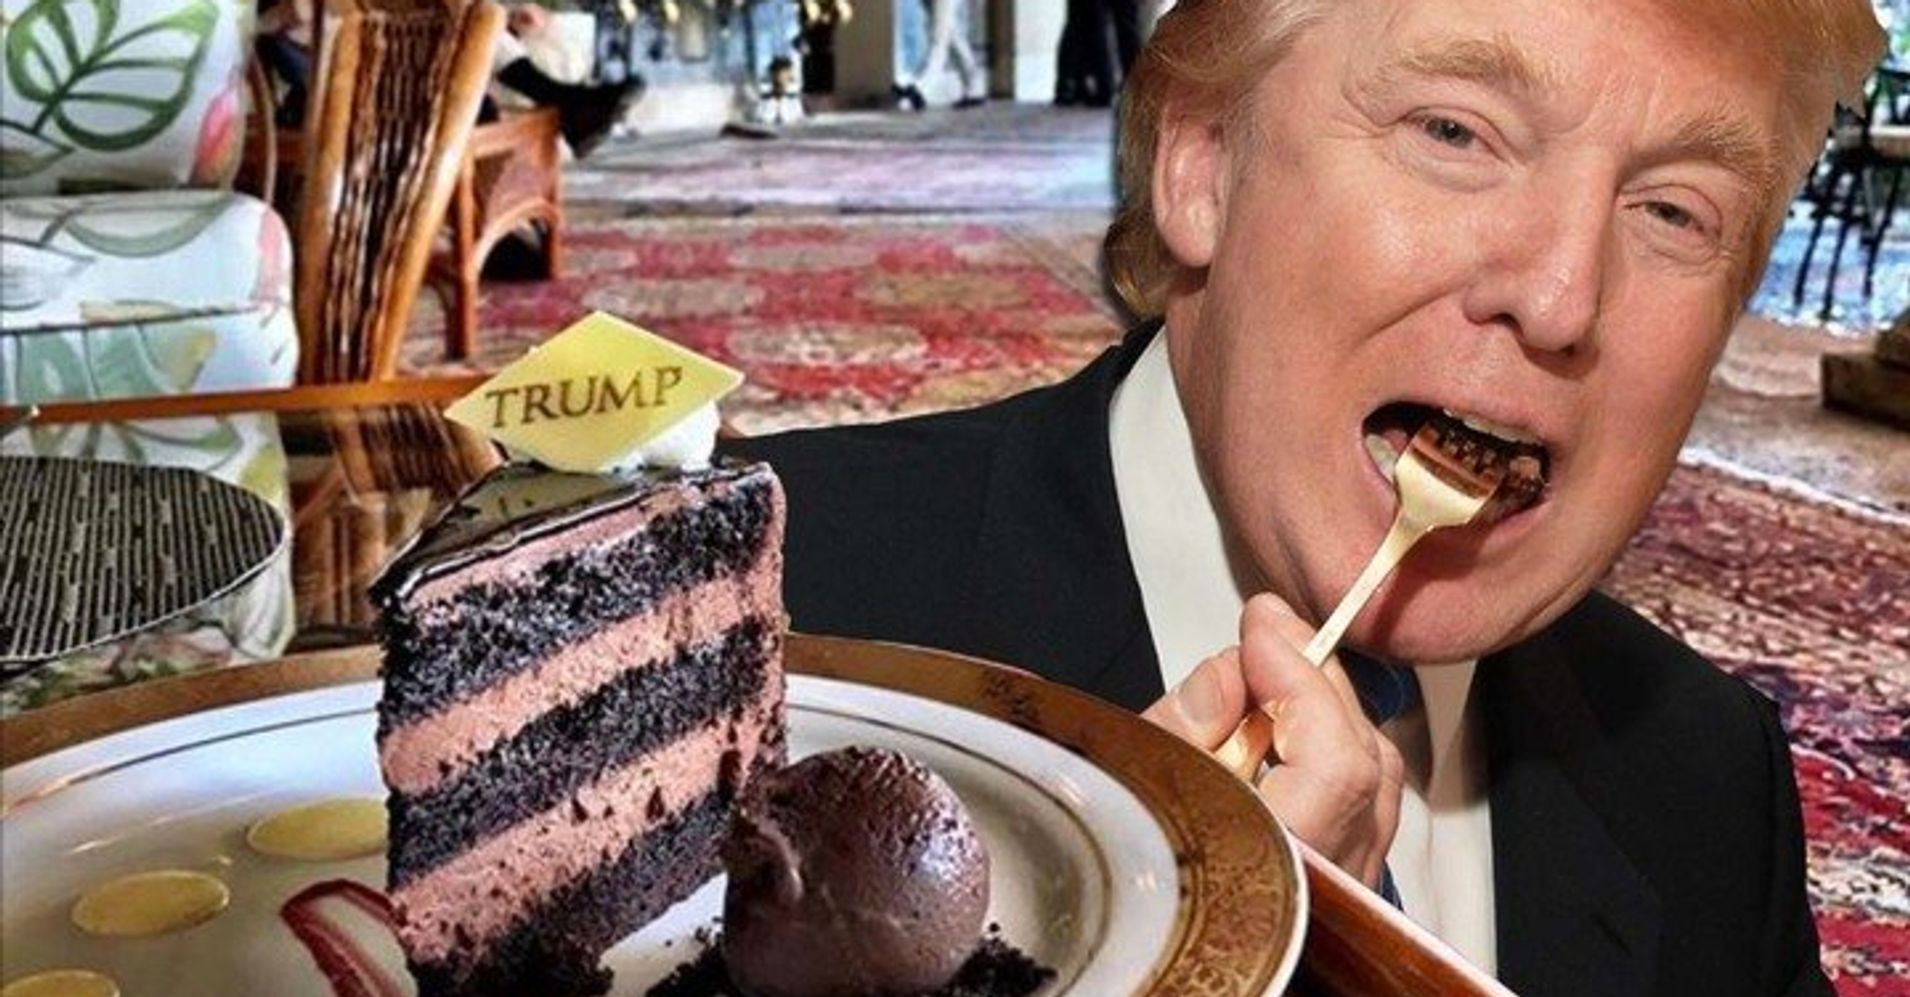 Trump Chocolate Cake Video Beautiful is Trump S Chocolate Cake Really the Most Beautiful You